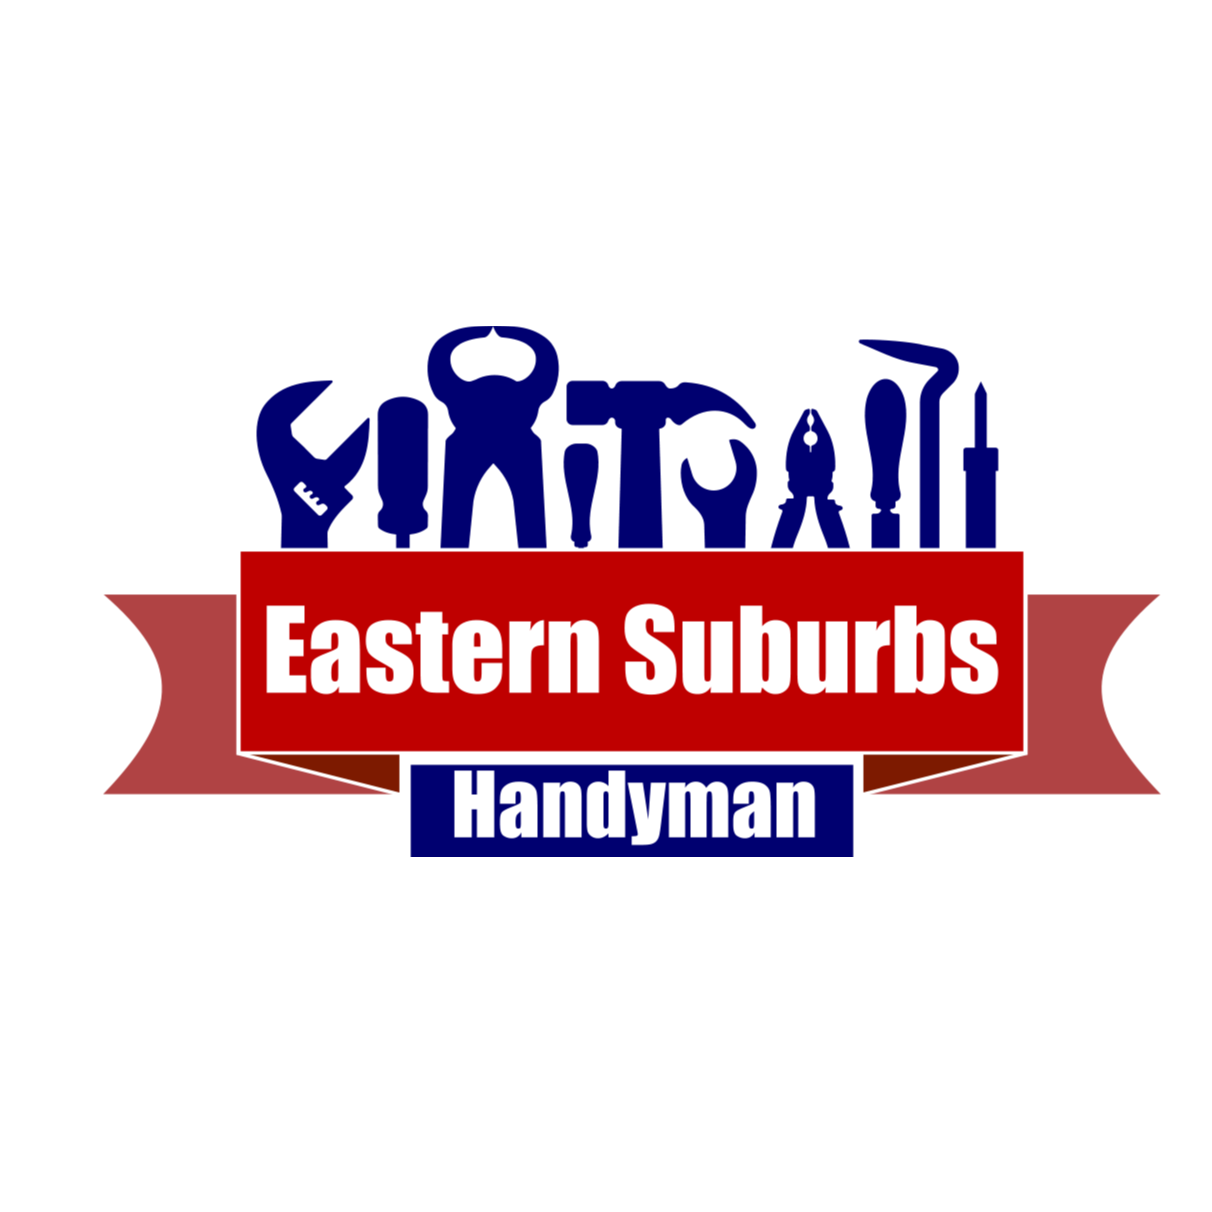 Eastern Suburbs Handyman